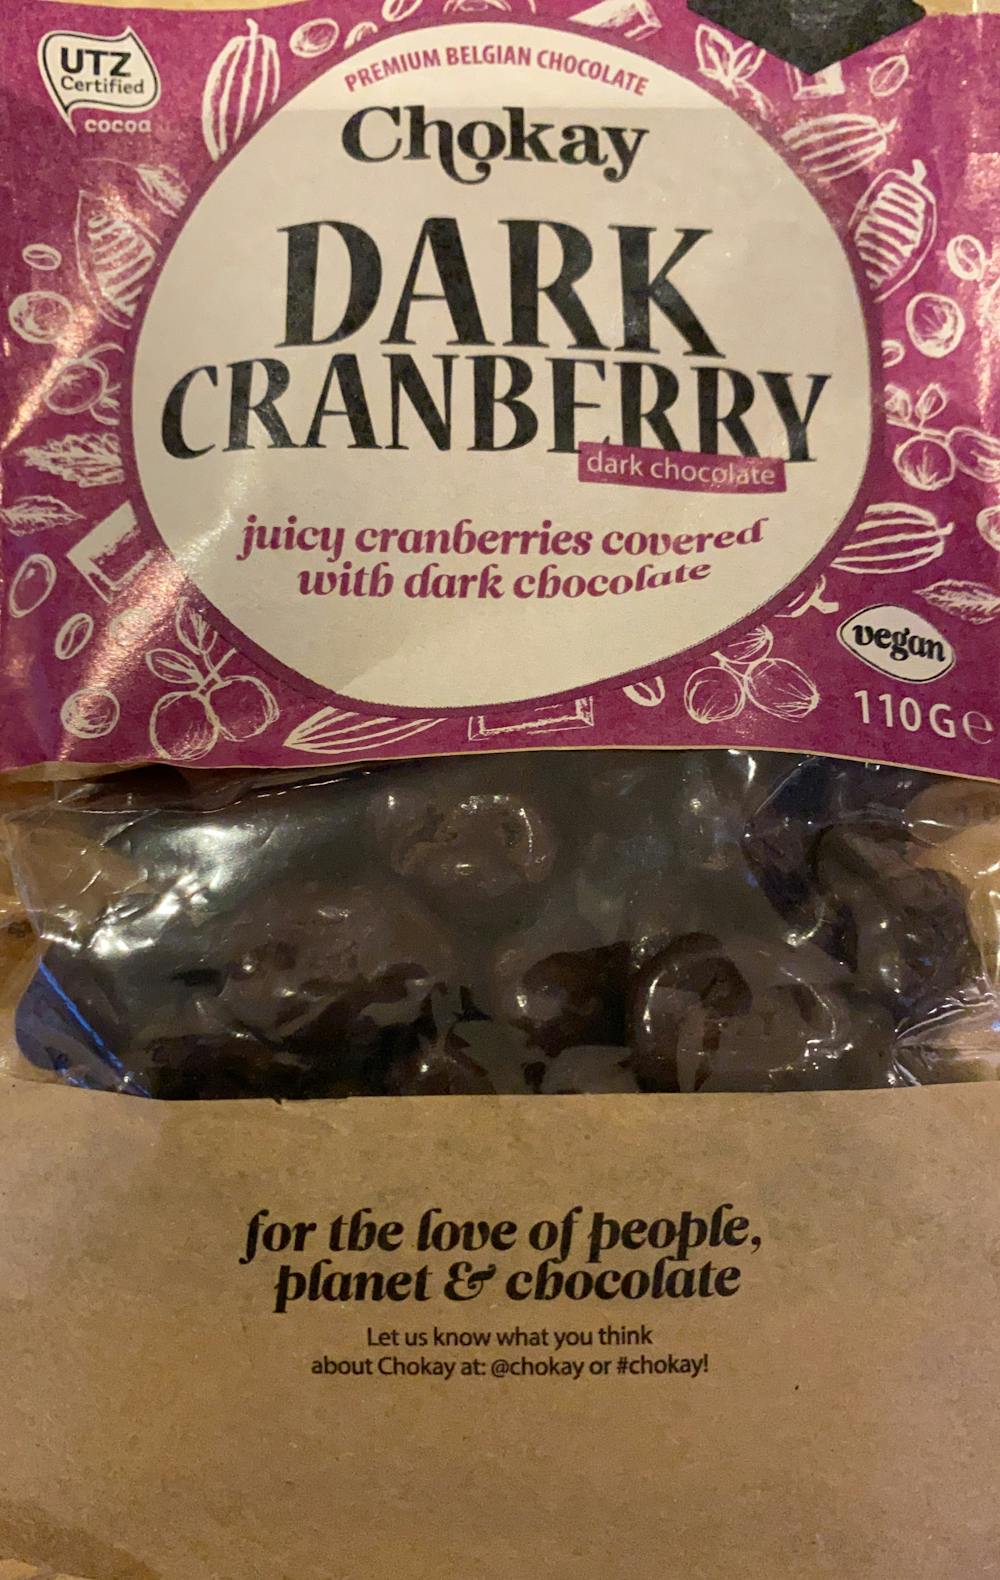 Dark cranberry, Chokay